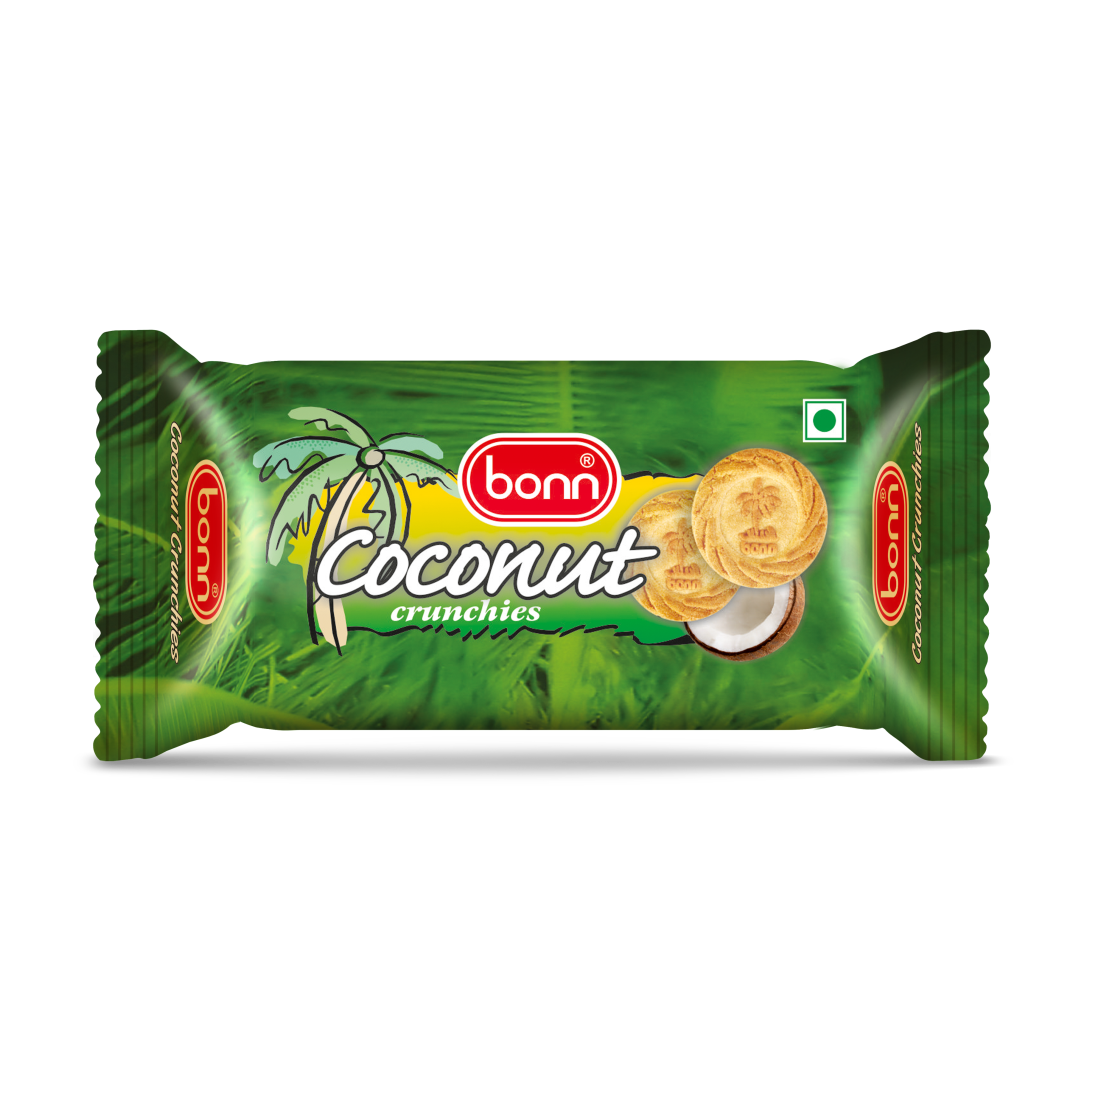 Bonn Coconut Crunch Biscuits, 40 g Pack